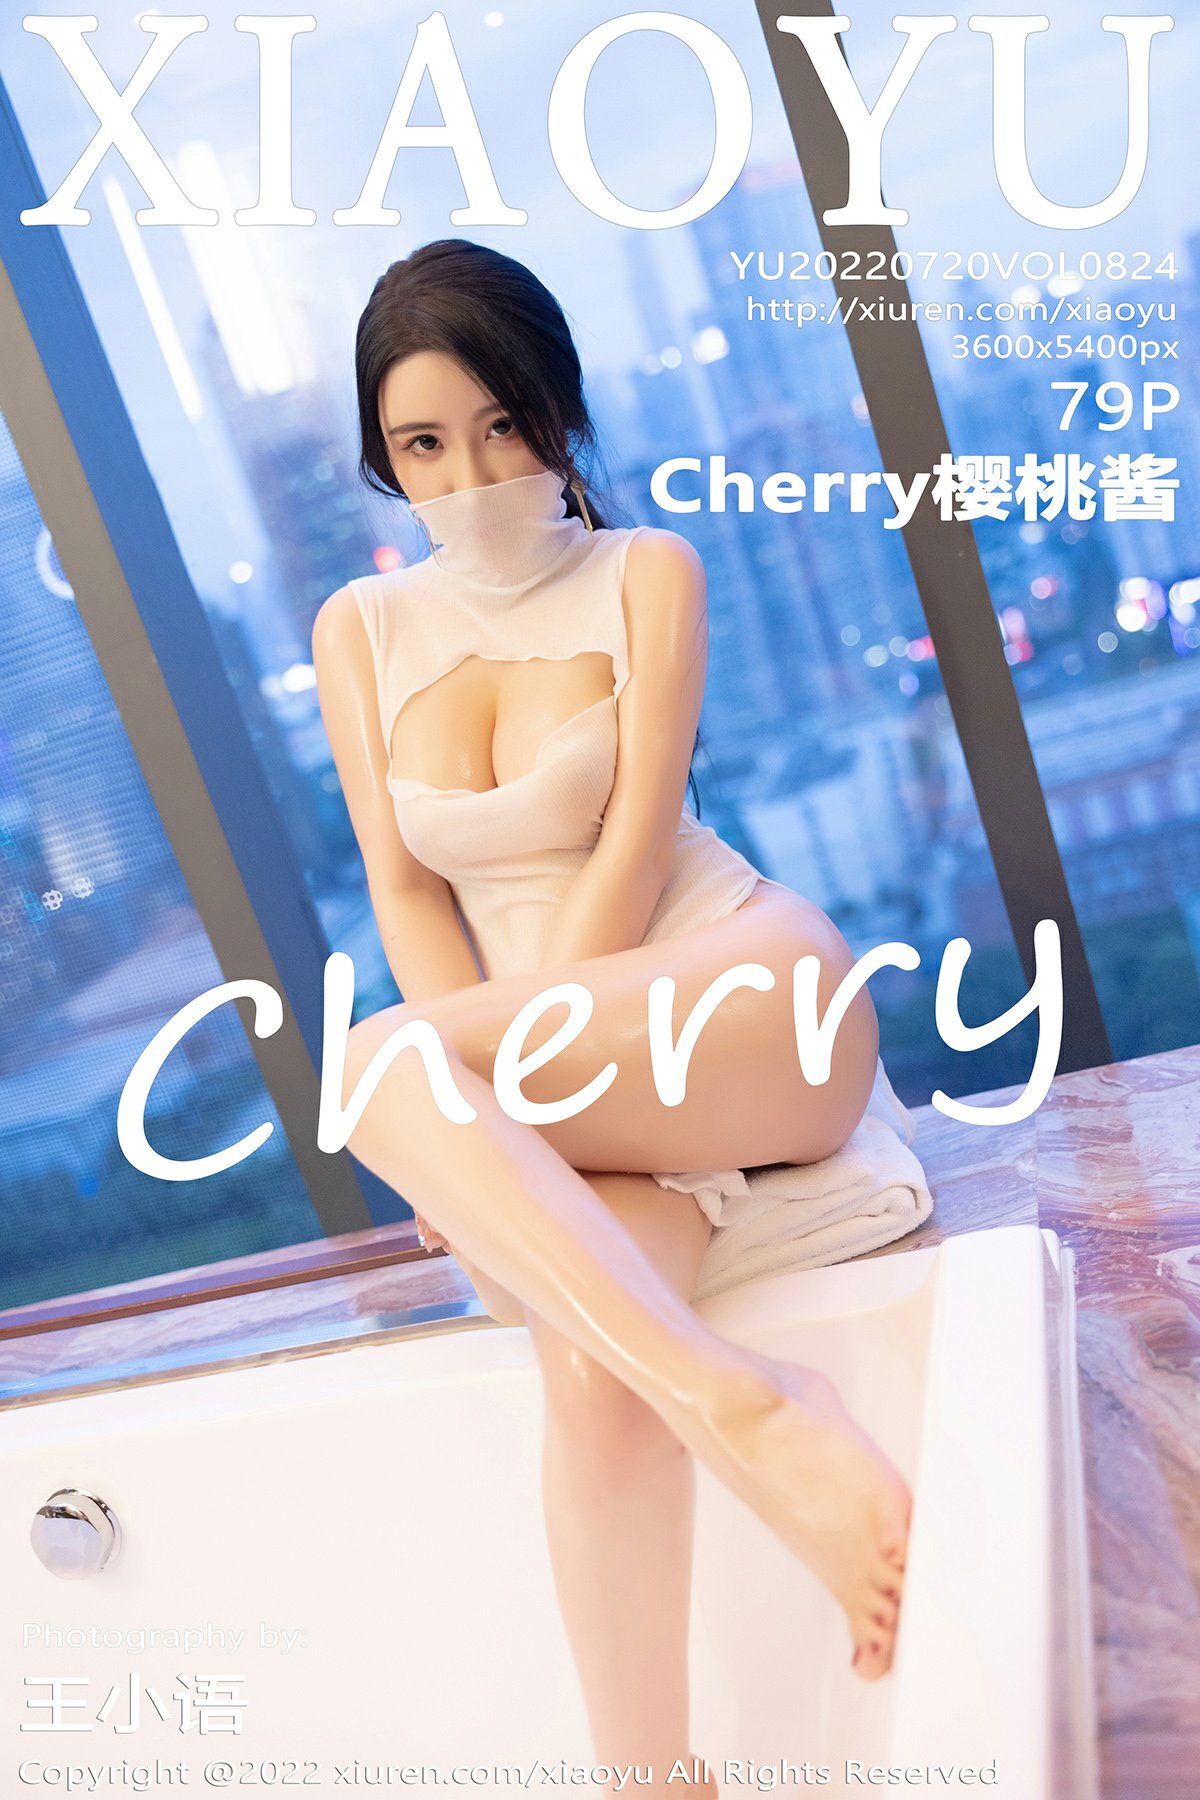 [XIAOYU语画界] 2022.07.20 VOL.824 Cherry樱桃酱 [79P206MB]-女神汇